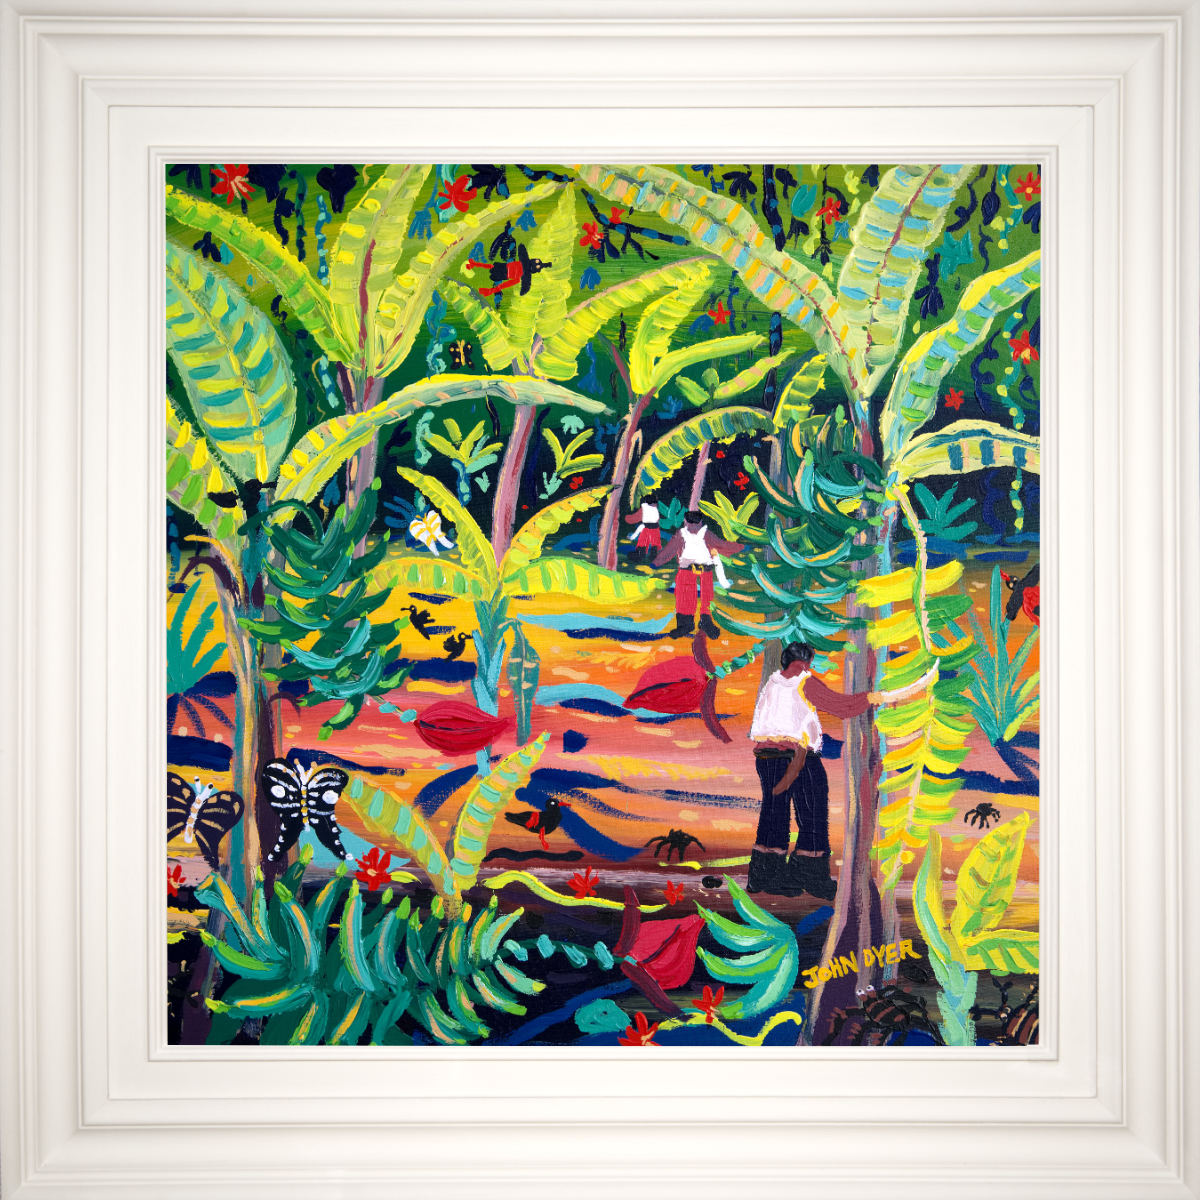 John Dyer Painting. 'Jungle Bananas, Costa Rica'. Caribbean Art Gallery.